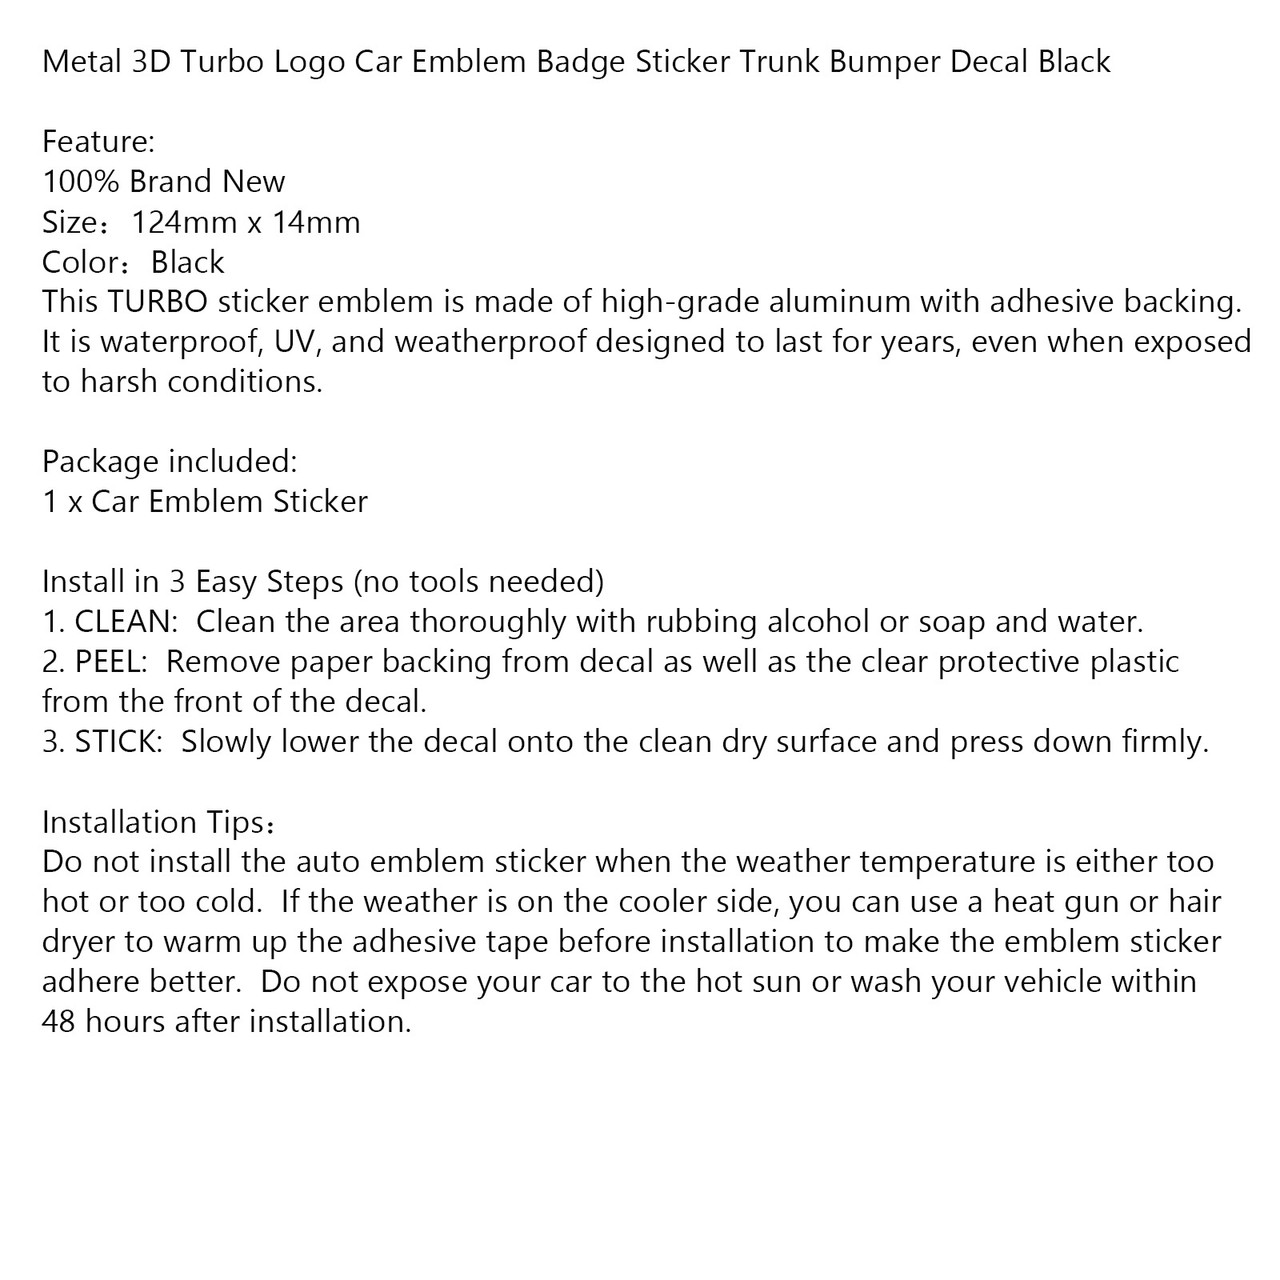 Metal 3D Turbo Logo Car Emblem Badge Sticker Trunk Bumper Decal Black